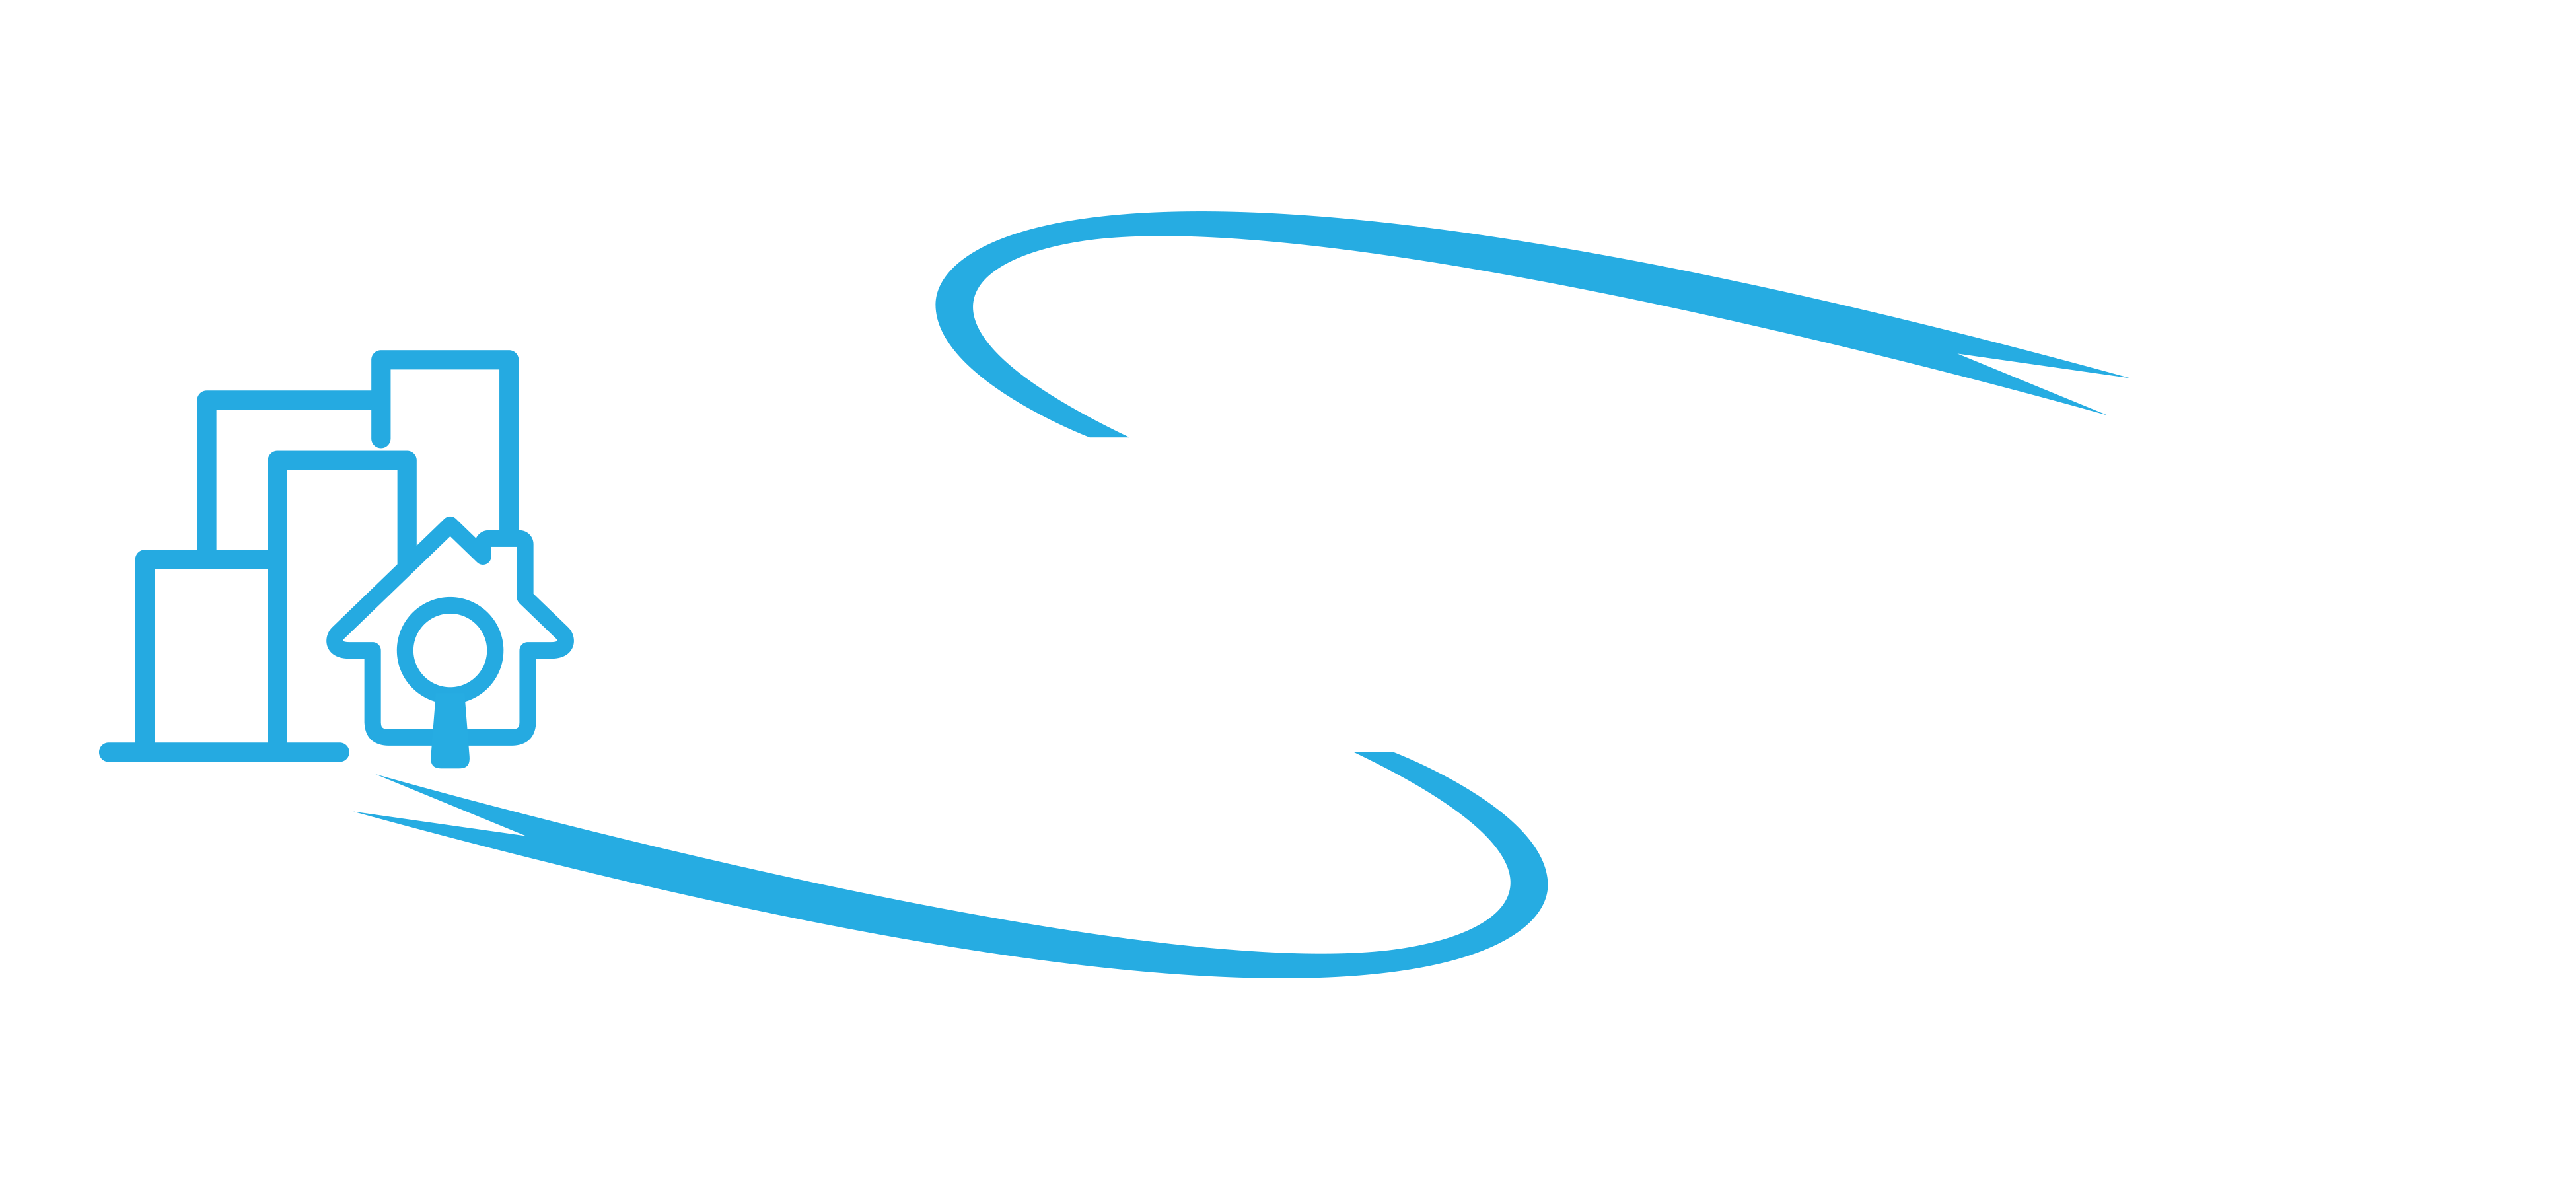 Preemptive Strike Environmental Inspections - White font